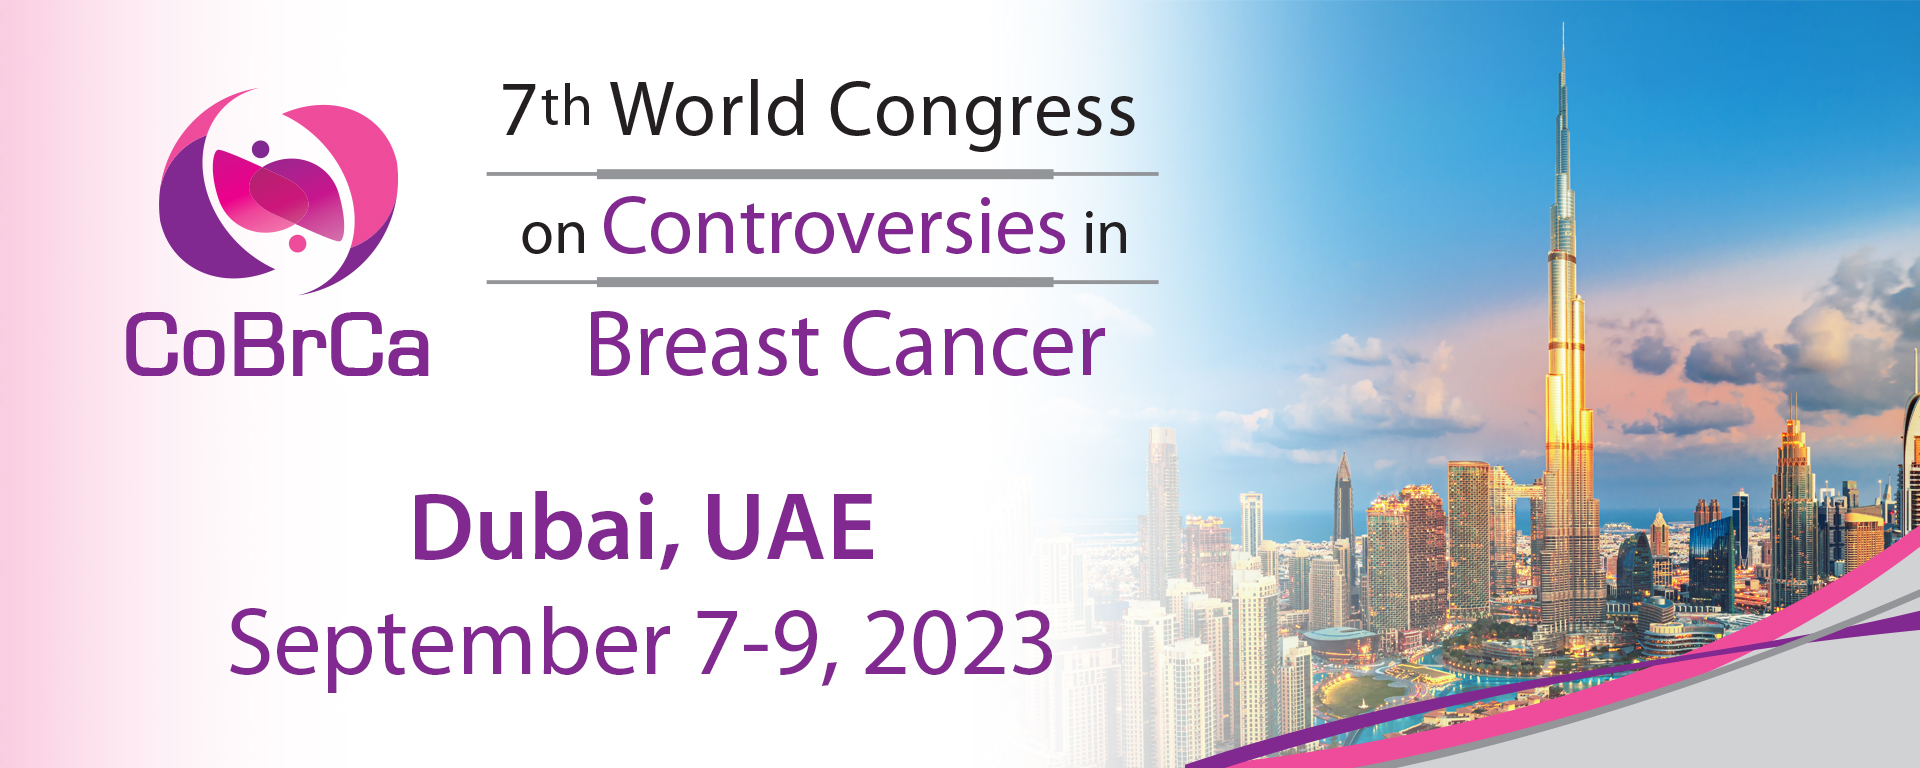 7th World Congress on Controversies in Breast Cancer (CoBrCa), Dubai, United Arab Emirates